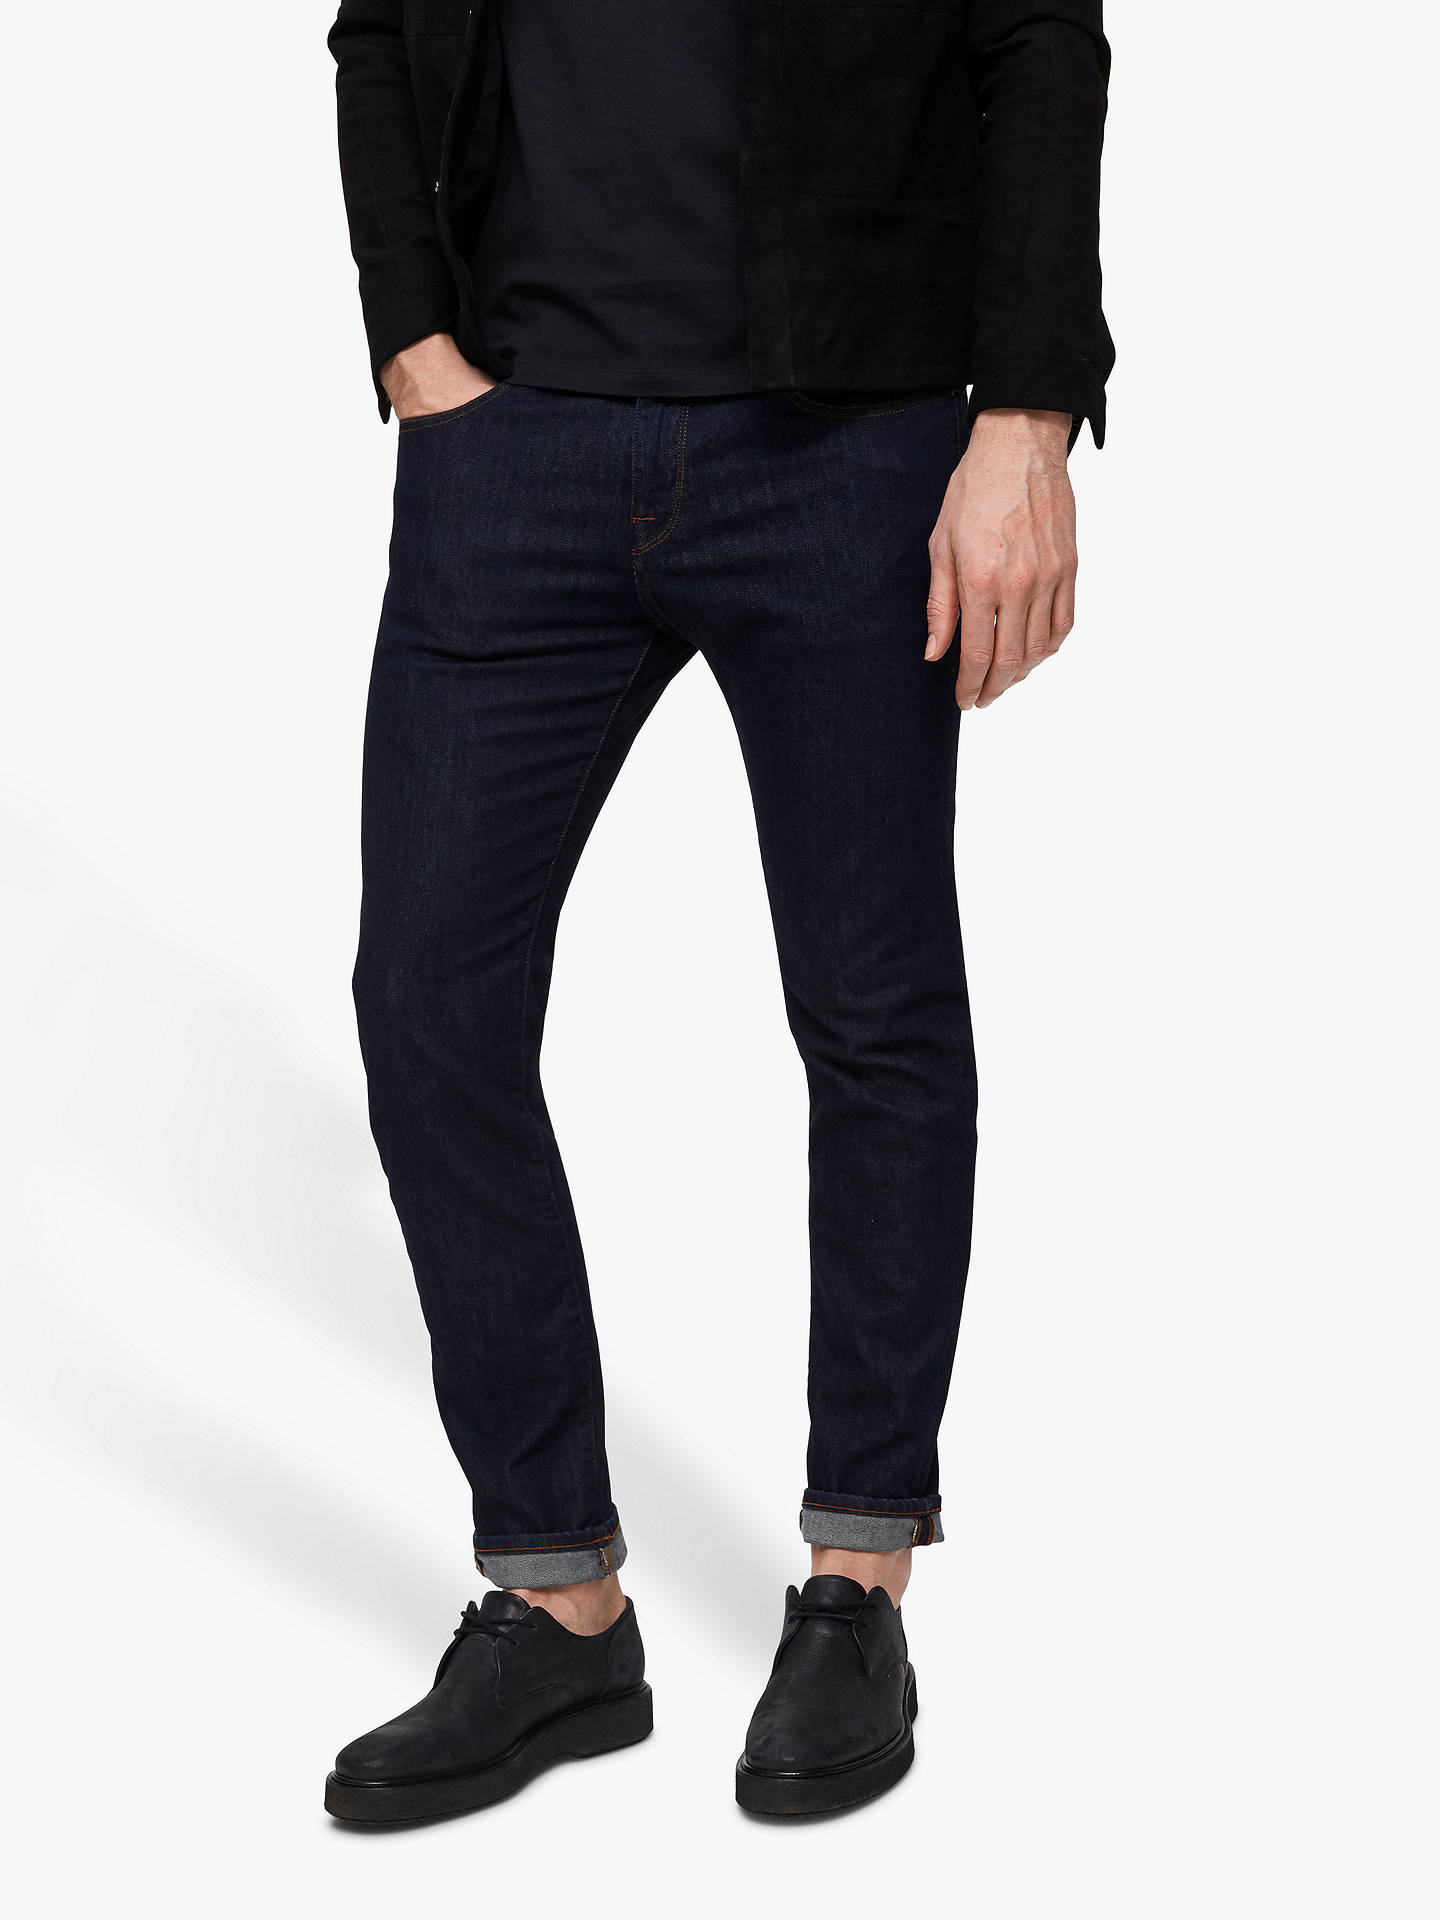 SELECTED HOMME Leon Slim Jeans, Dark Rinse at John Lewis & Partners